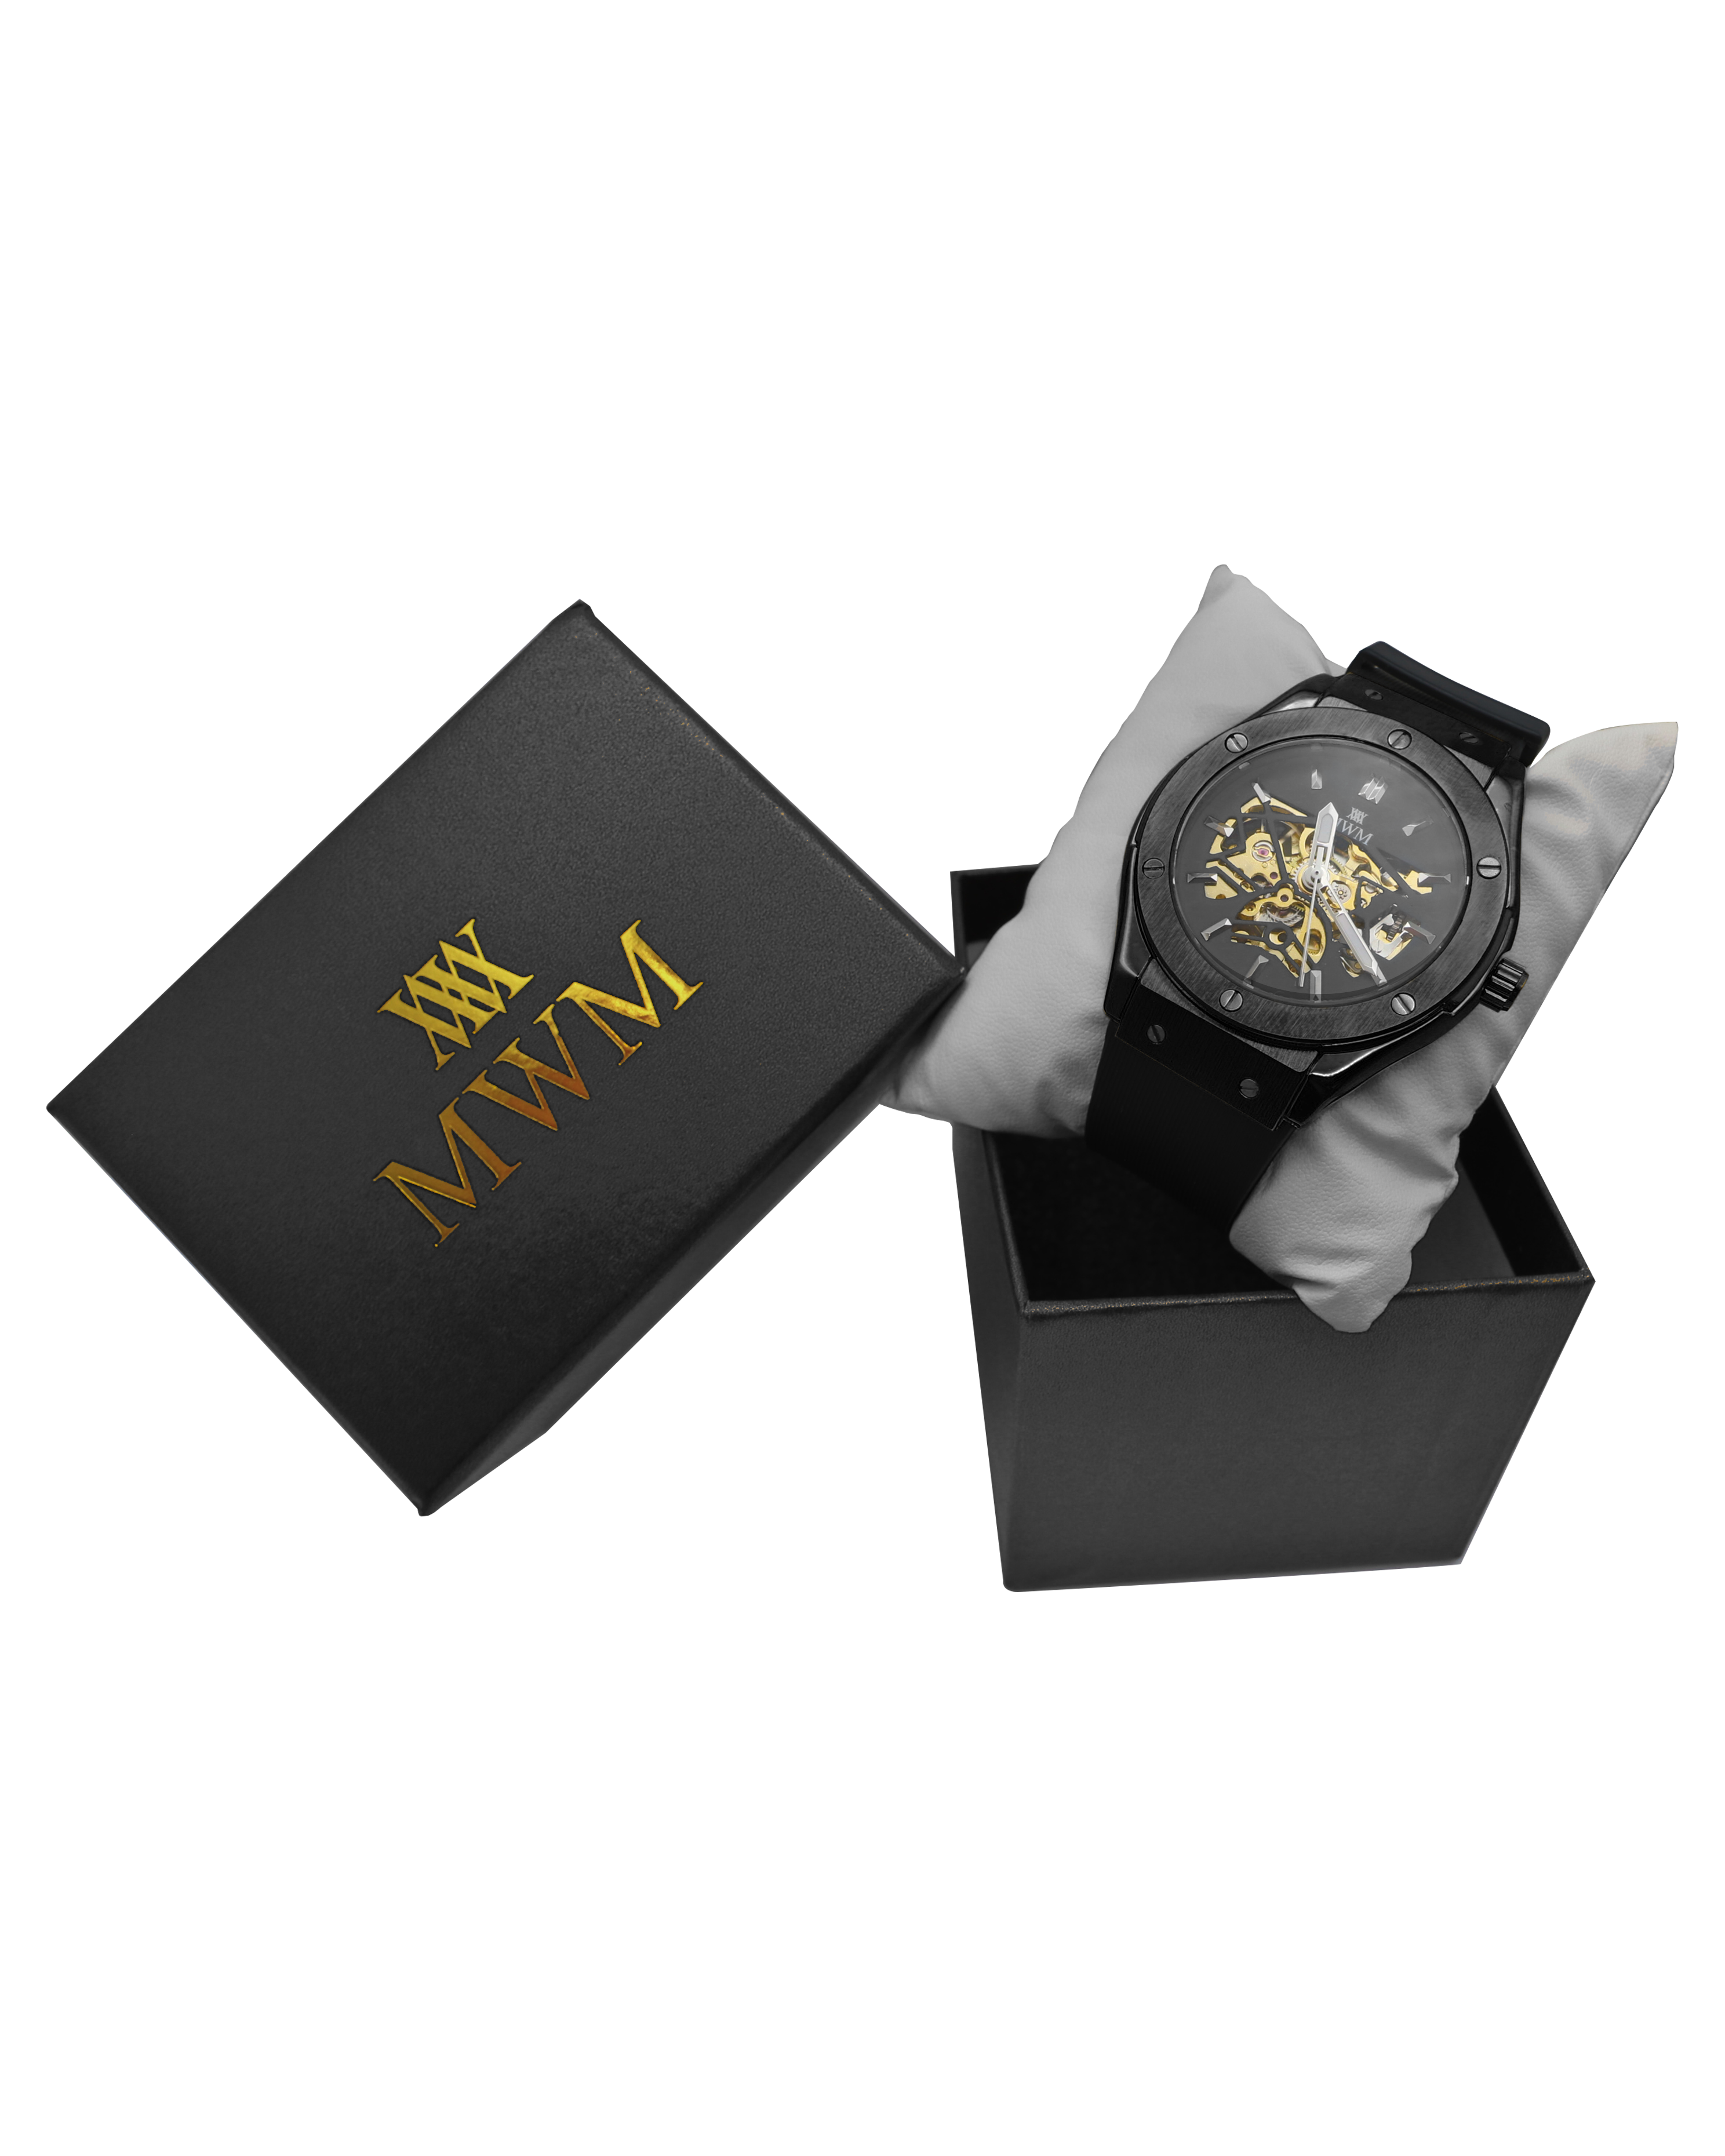 FIYTA Archives | Red dot design, Diamond watch, Design awards